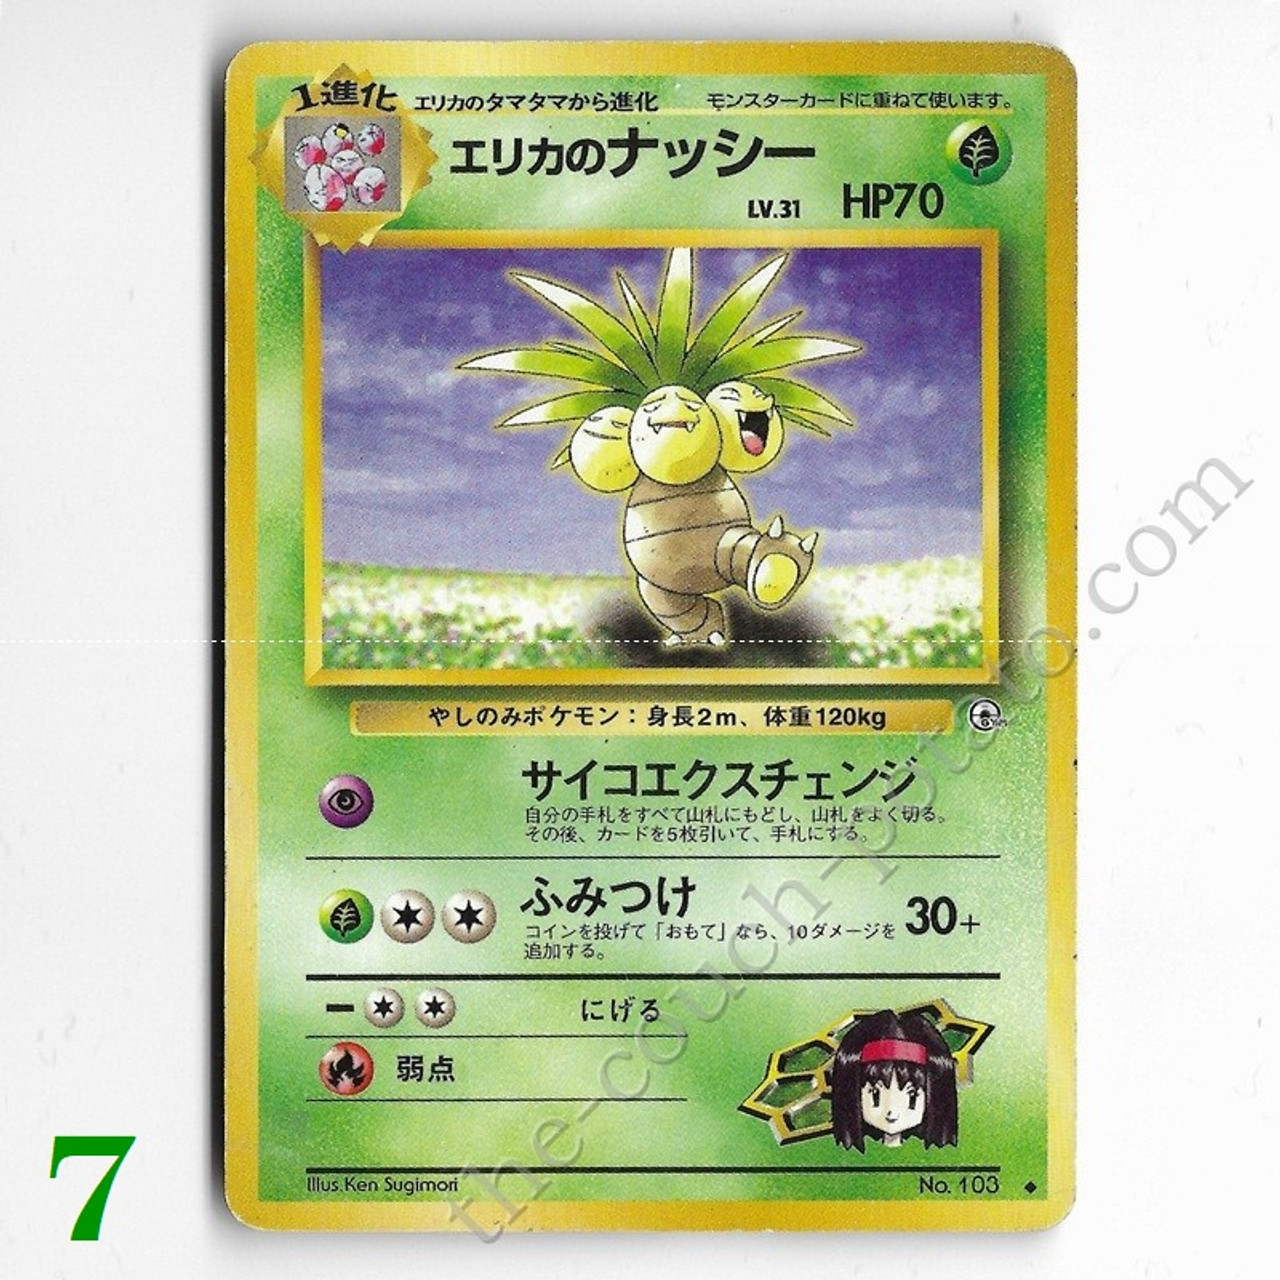 11+ Misprint pokemon cards mcdonalds images